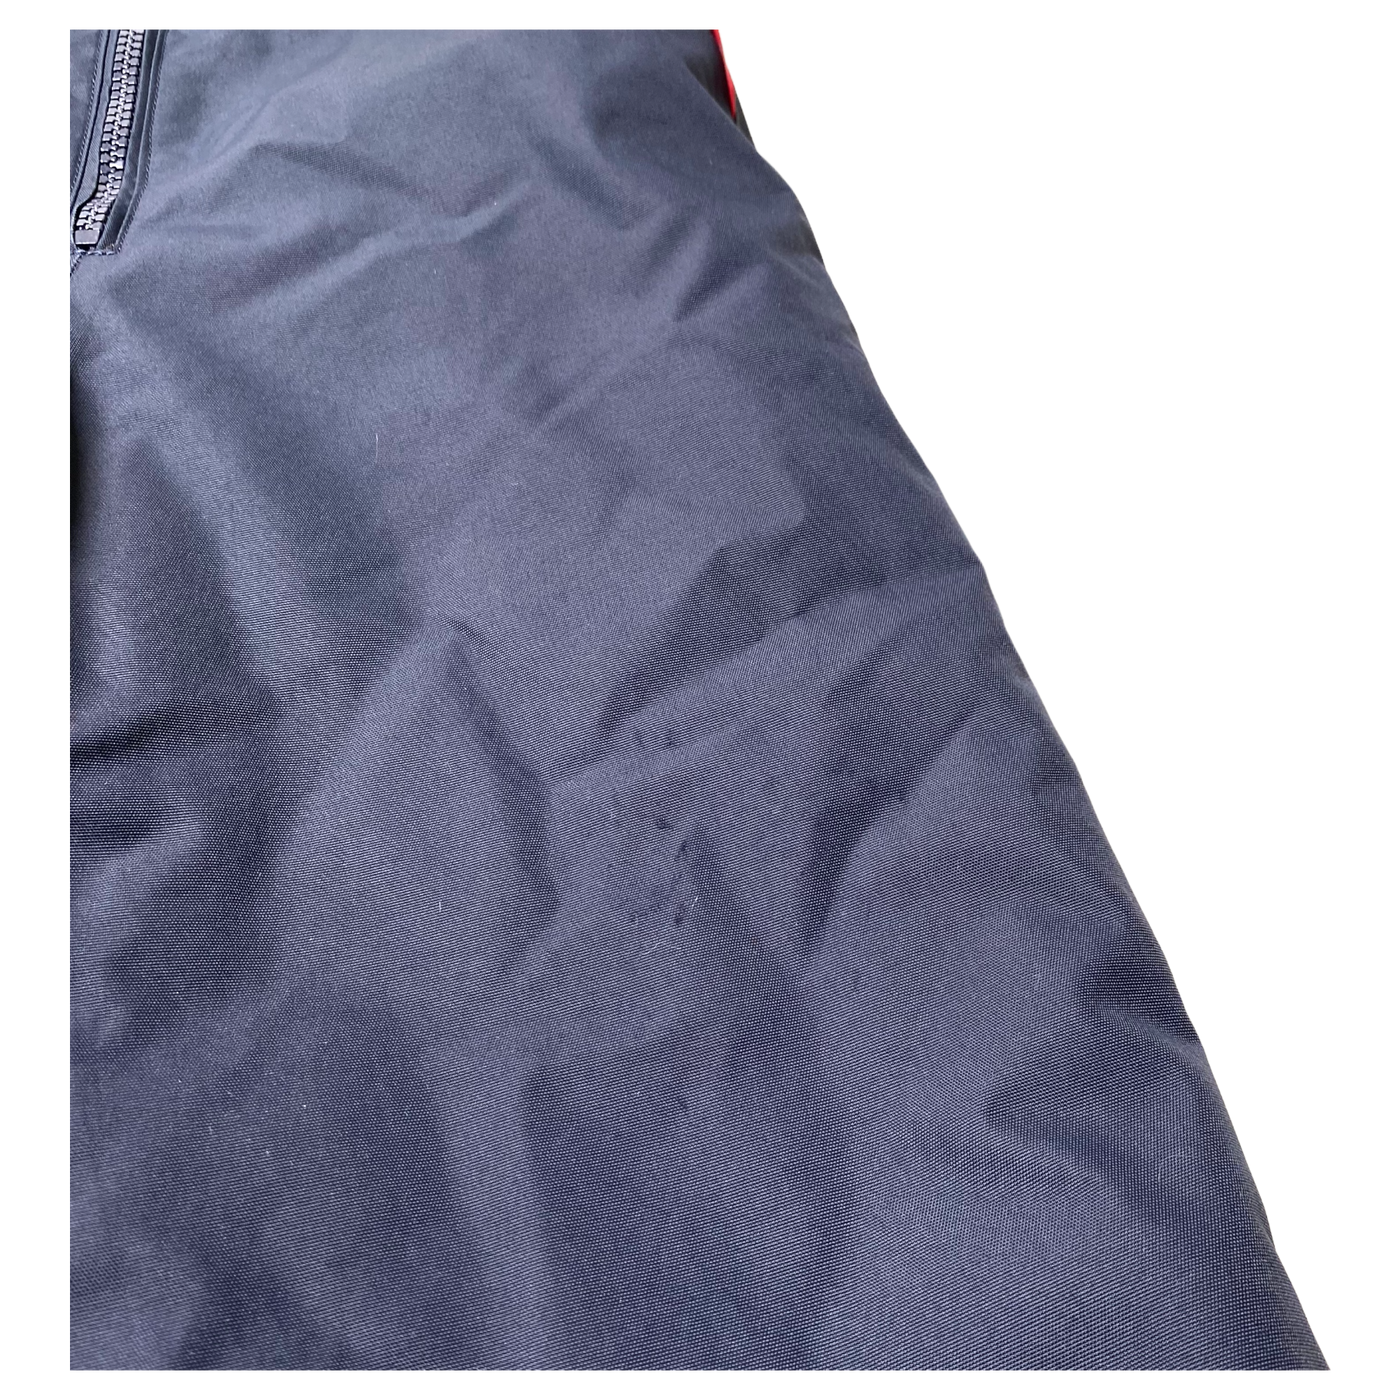 Reima padded pants, midnight blue | 92cm